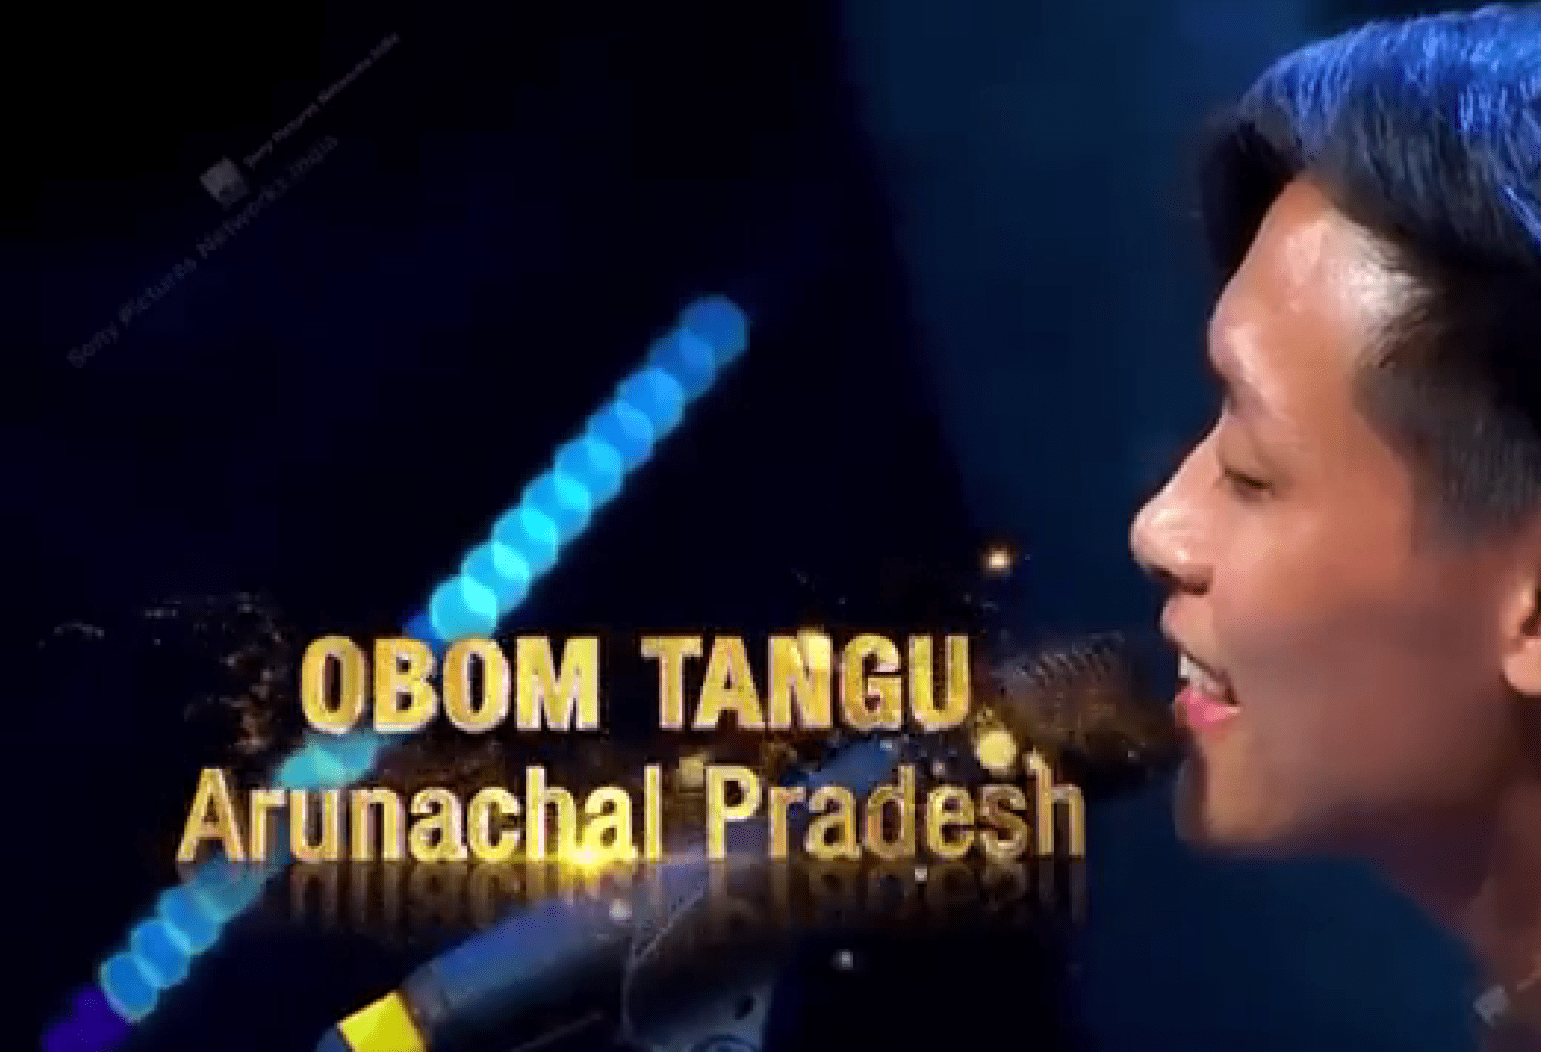 Obam Tangu Indian Idol 14 Contestant – Audition Video, Bio